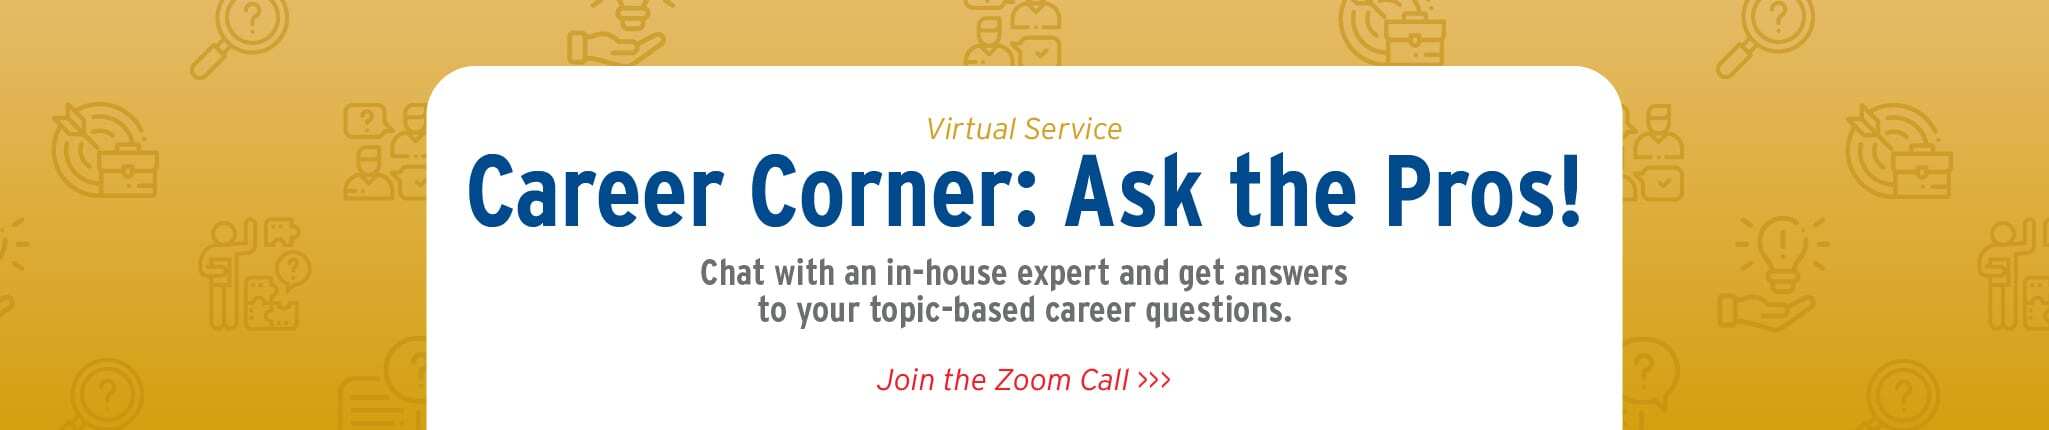 Career Corner: Ask the Pros